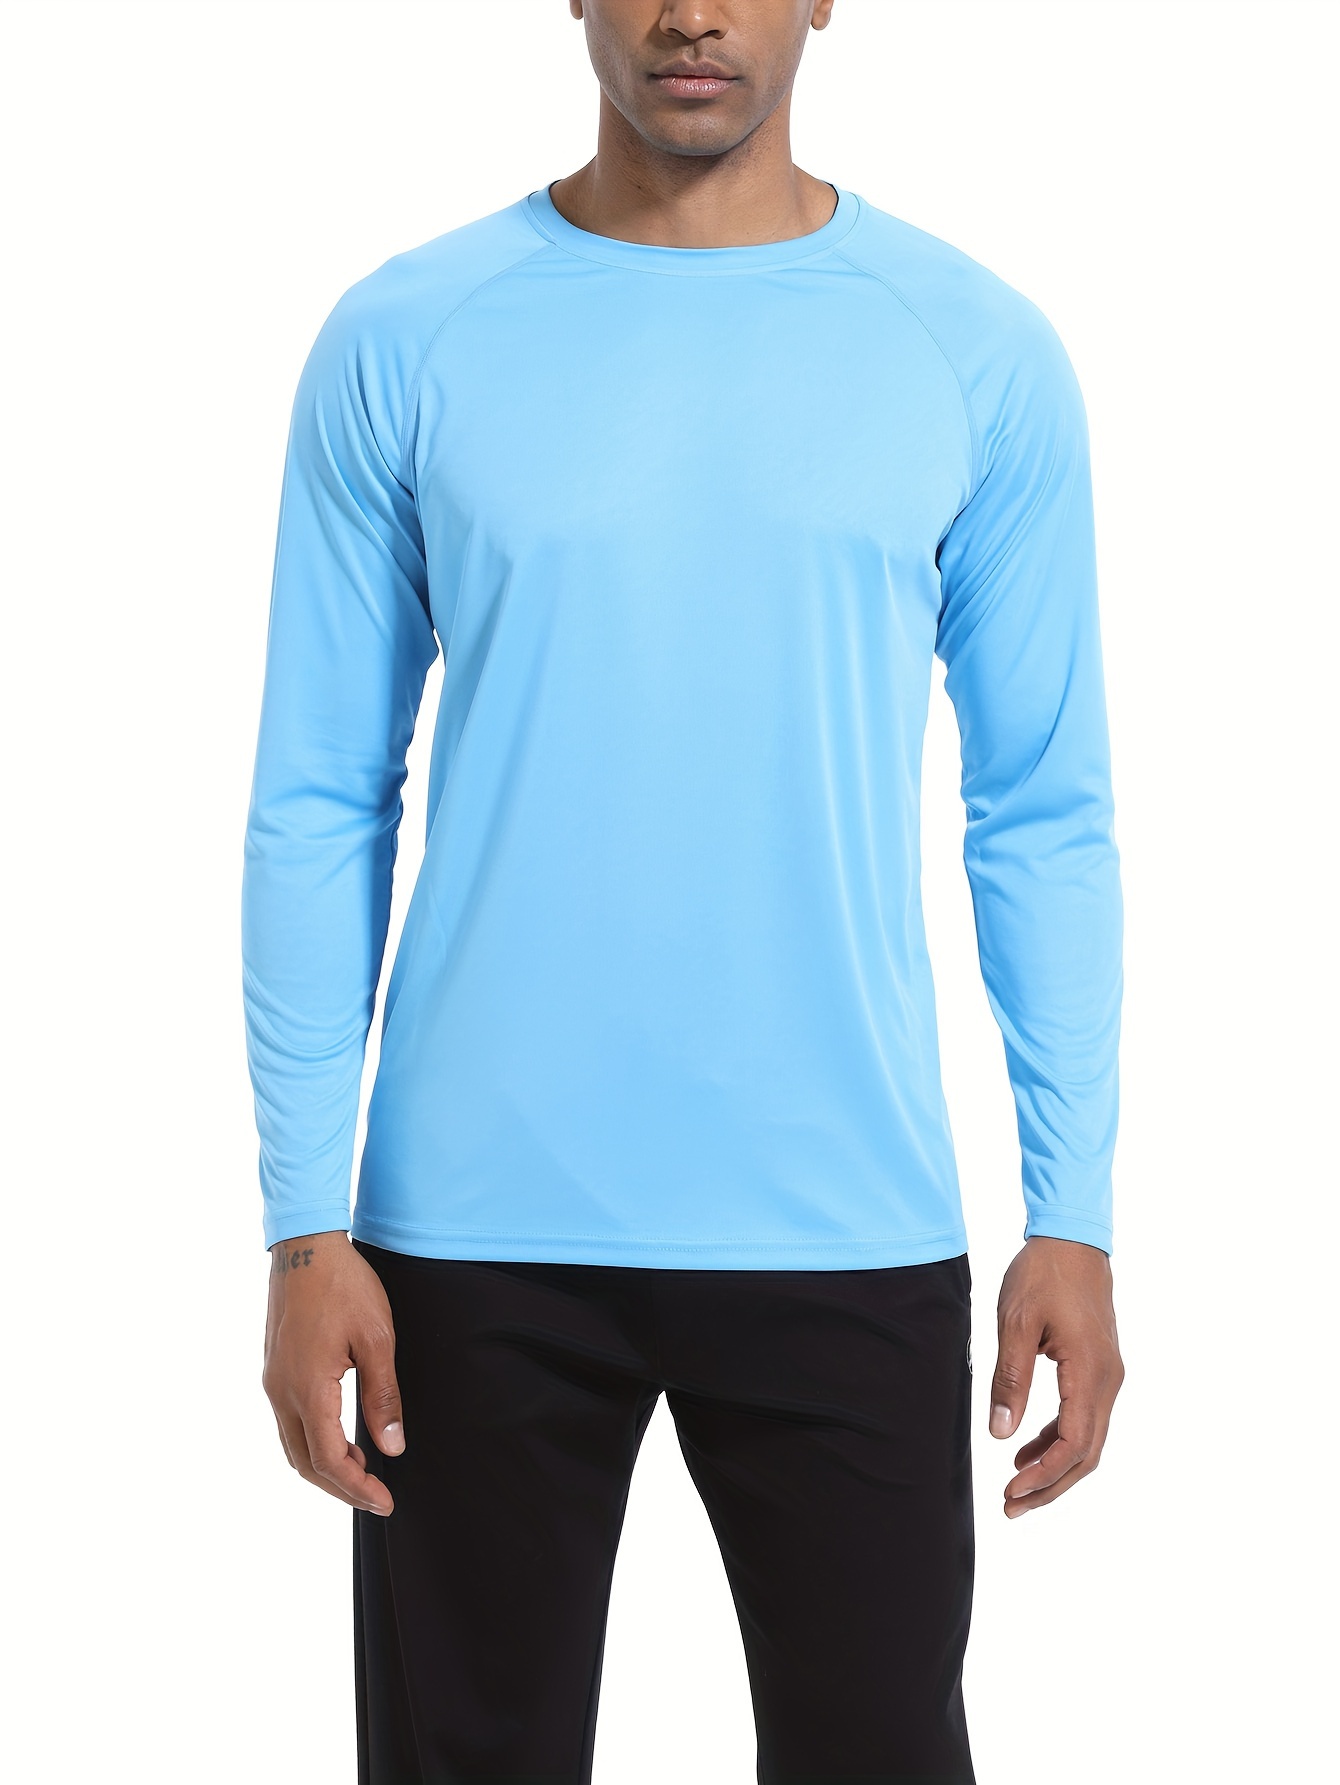 Men's XL Long Sleeve T-Shirt Weekender SPF 50 Aqua Crewneck Fishing Shirt